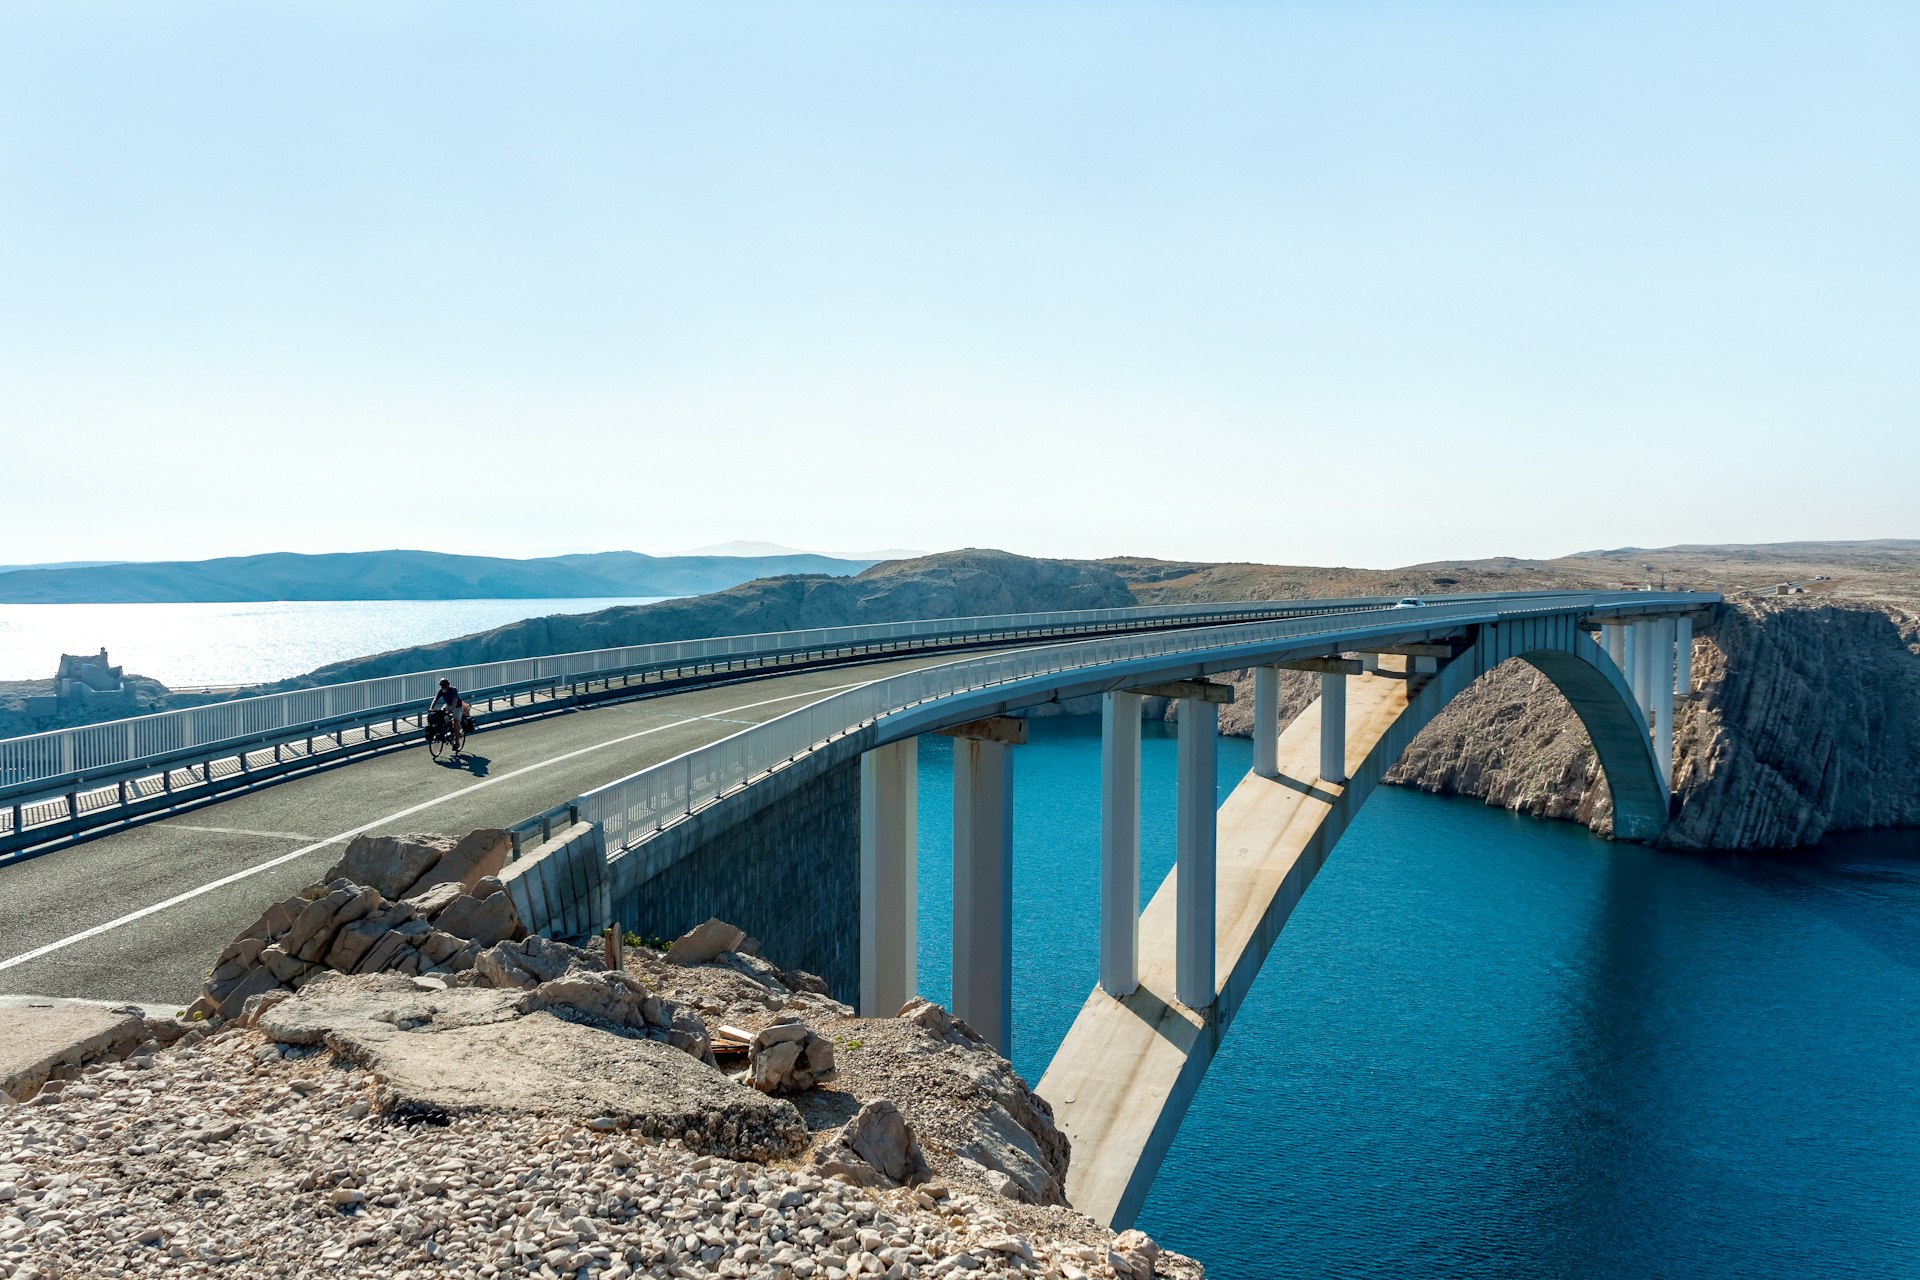 Pag bridge in Croatia 